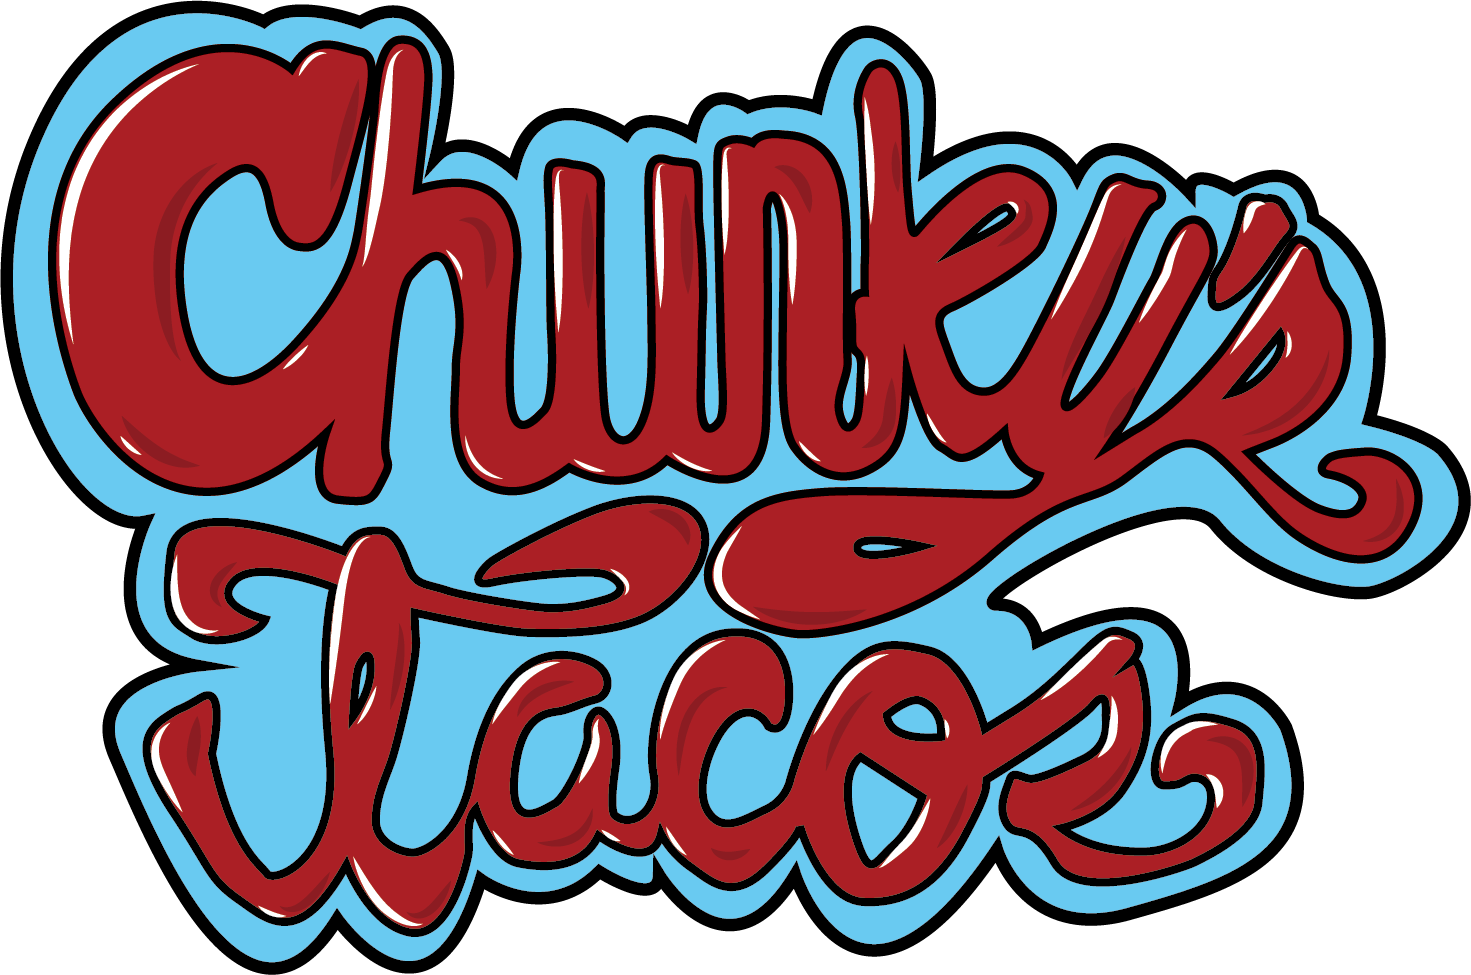 Chunky&#39;s Tacos